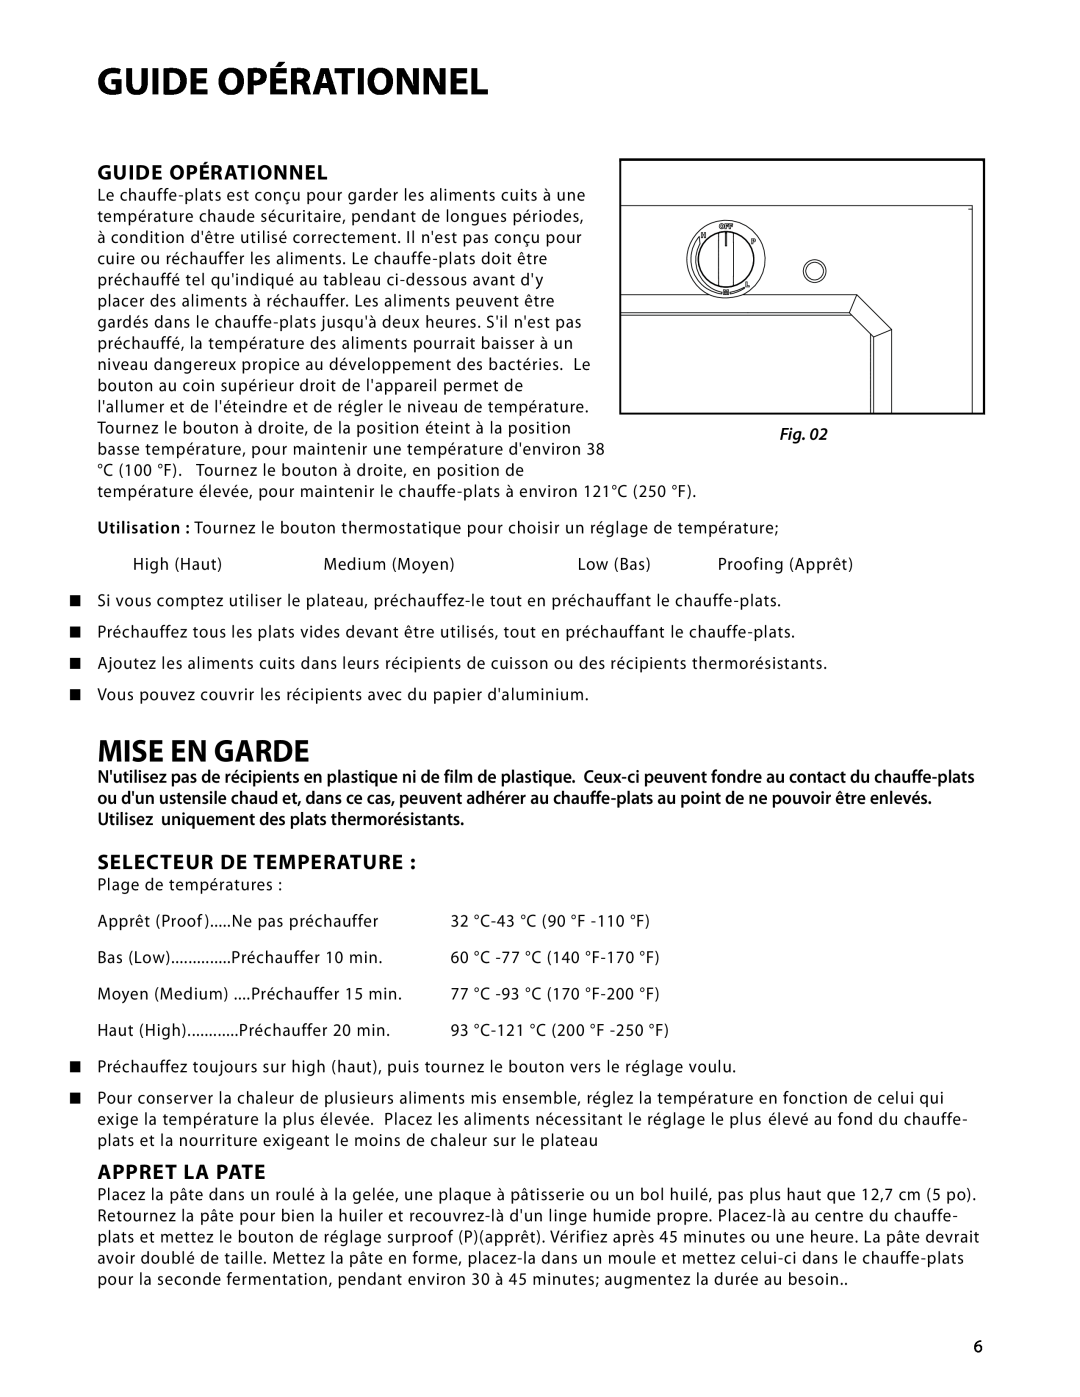 DCS WDTI, WDT-30 manual Guide Opérationnel, Mise En Garde 